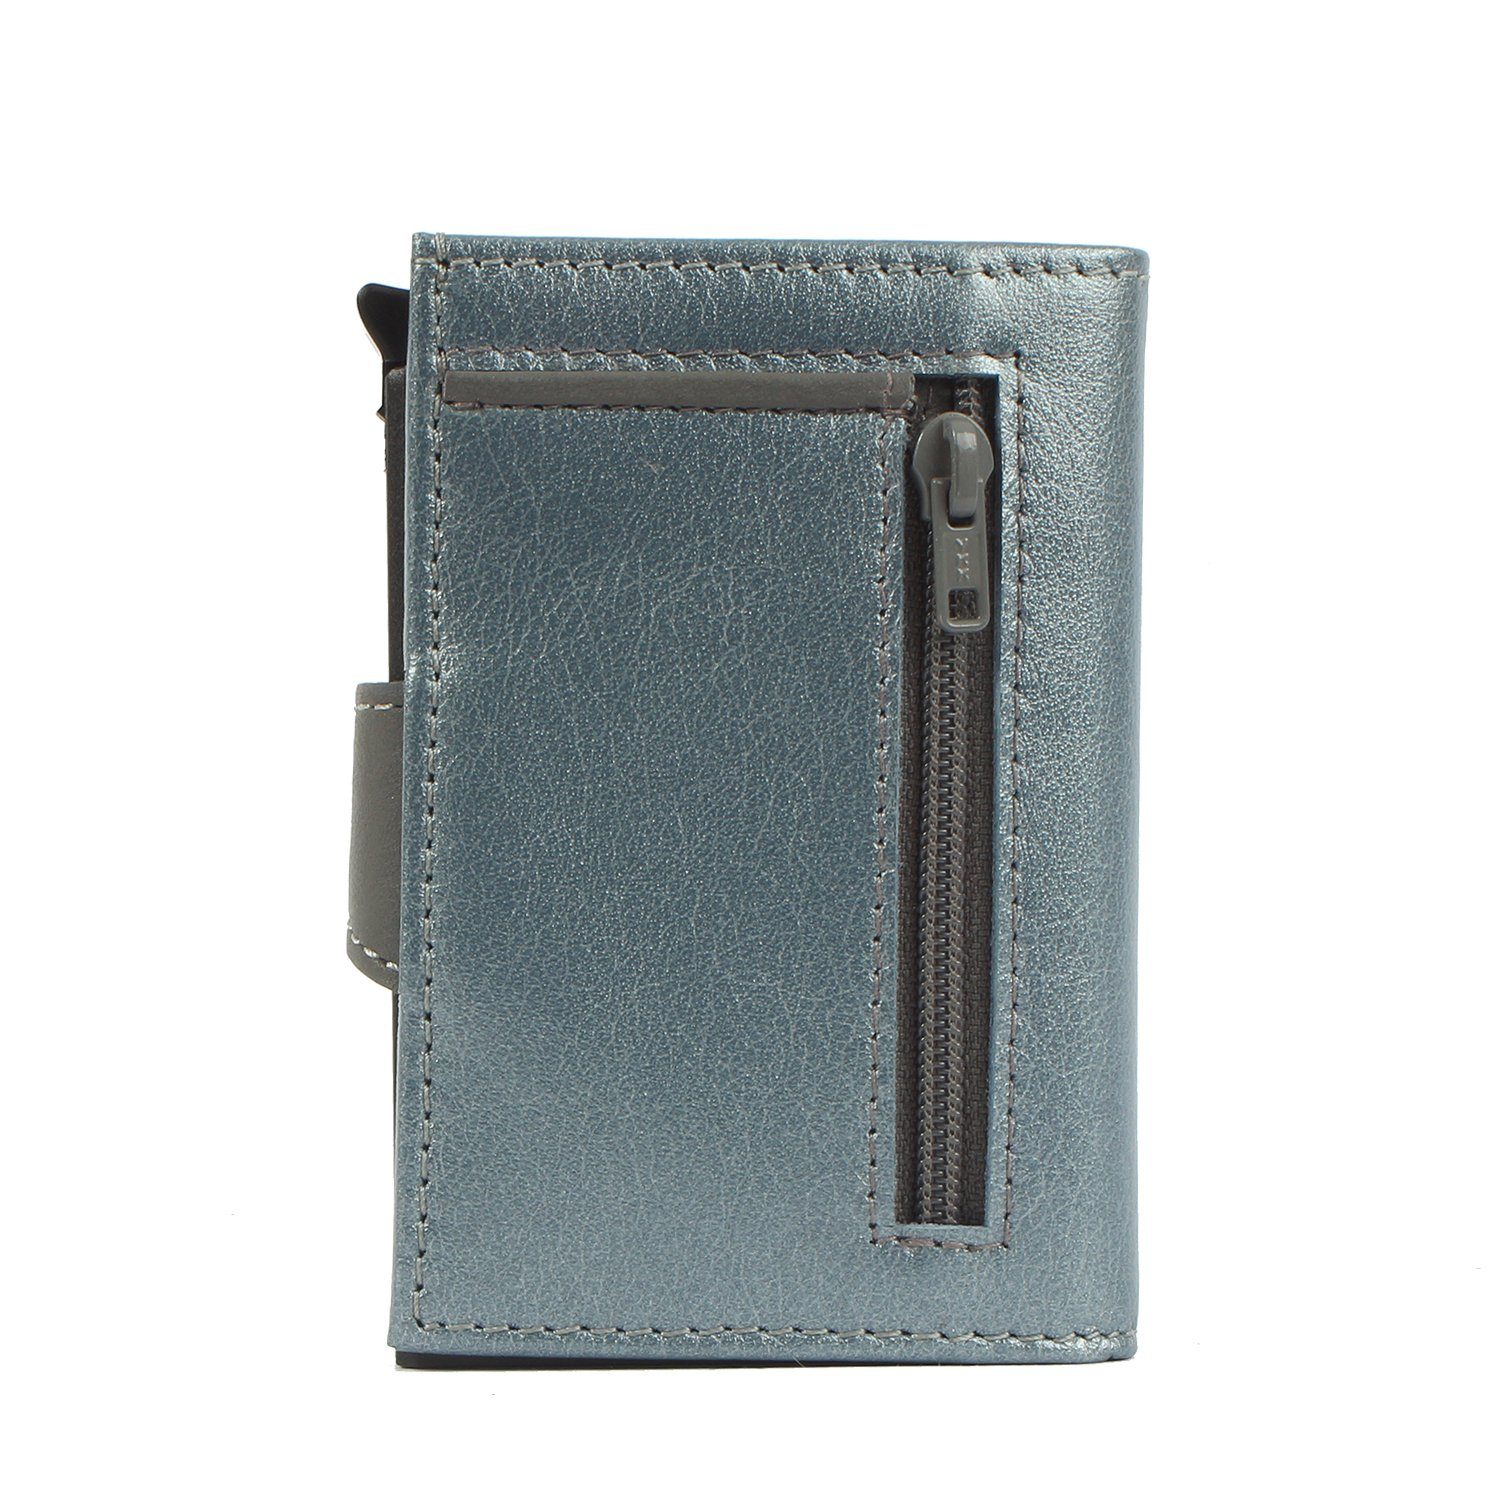 Margelisch Mini Geldbörse noonyu silverblue aus leather, single Leder Kreditkartenbörse Upcycling